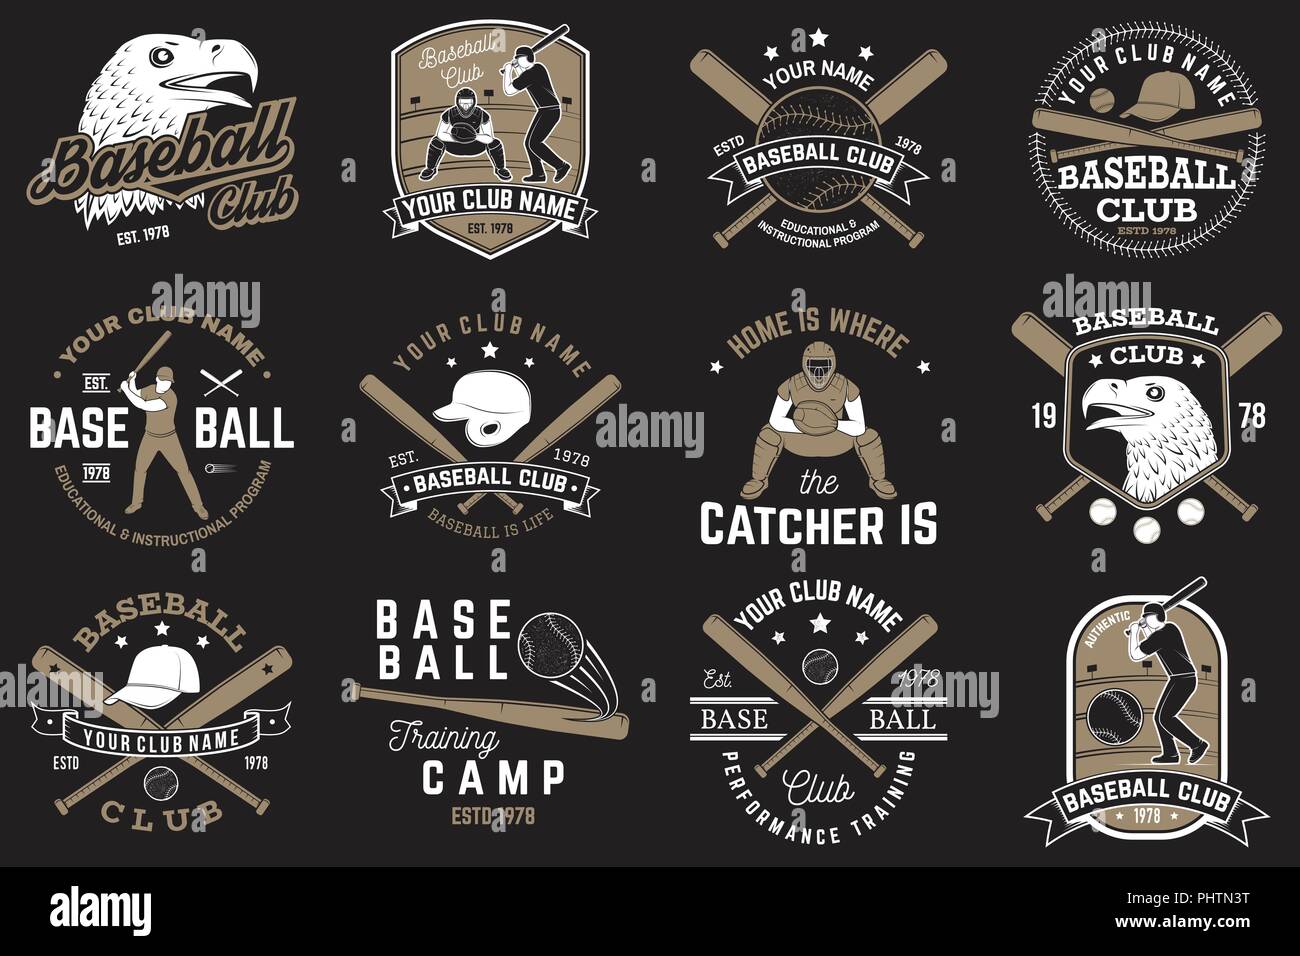 Vintage Baseball Shirt Design  Tournament Shirt Design Template